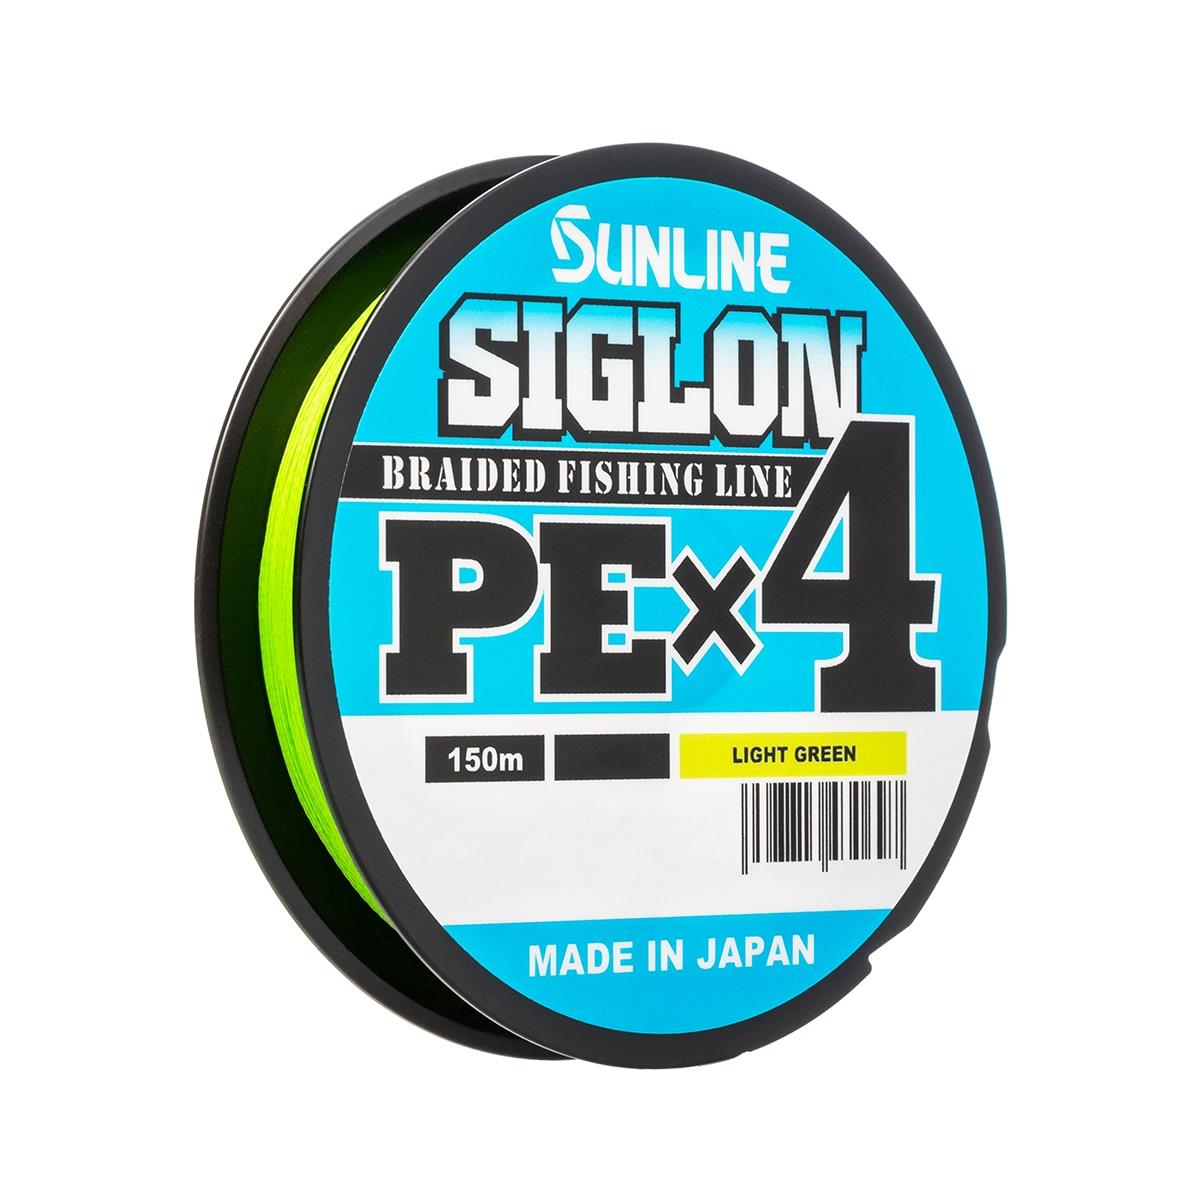 Шнур SIGLON PE×4 150 м (Light green) Sunline шнур для вязания 100% полиэфир 1мм 200м 75±10гр 10 бронза